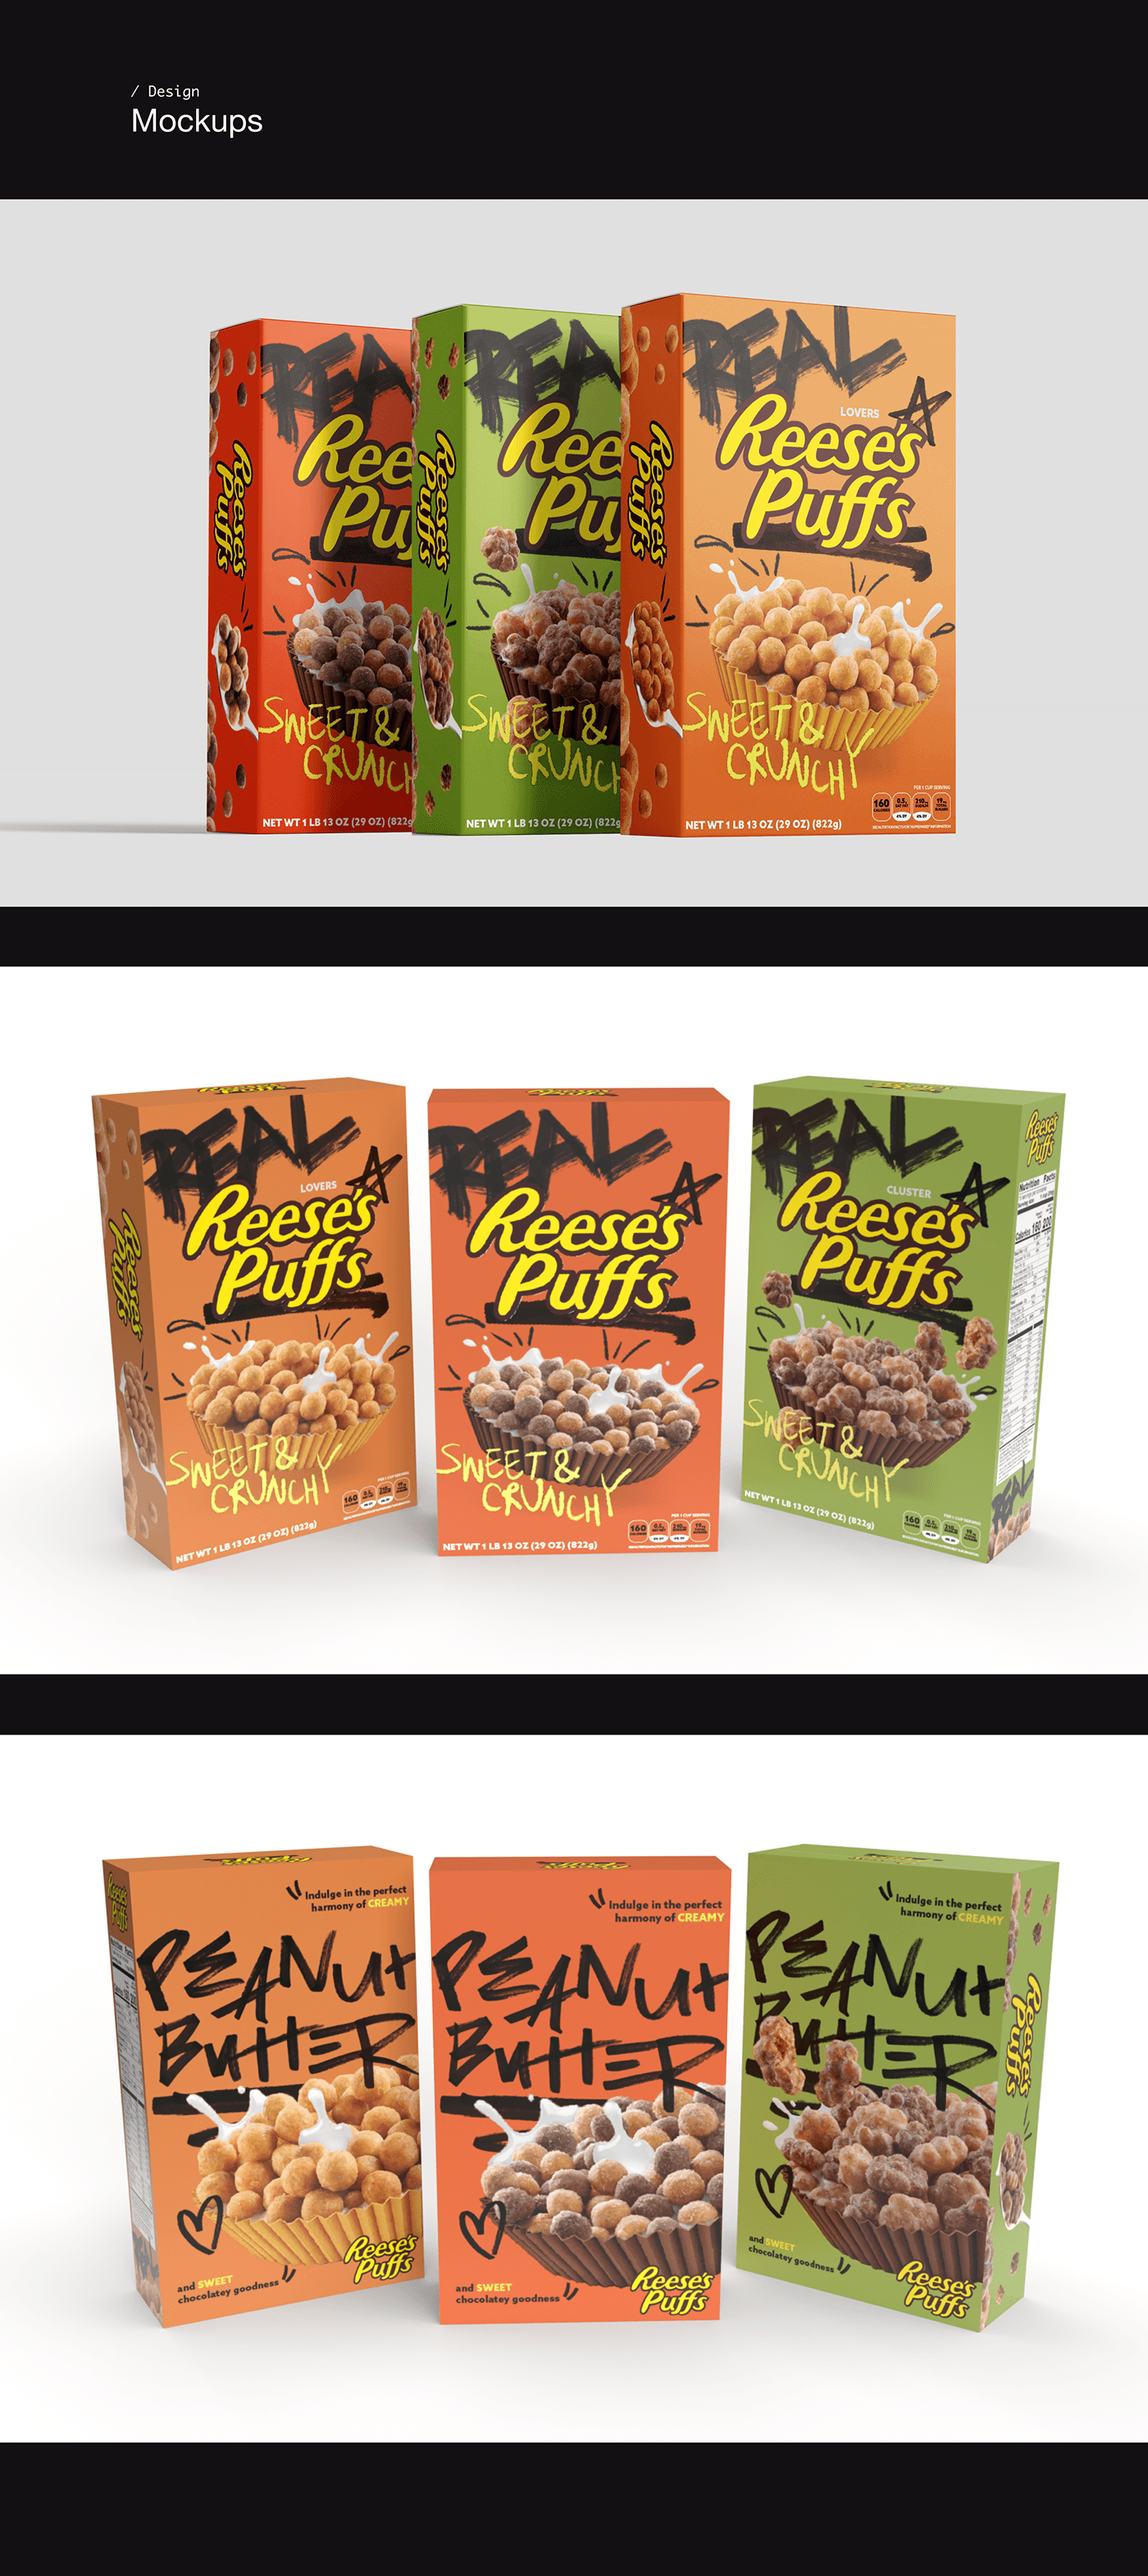 Packaging packaging design cereal packaging cereal packaging design Reese's Puffs graphic design  Adobe Photoshop adobe illustrator Adobe Dimension